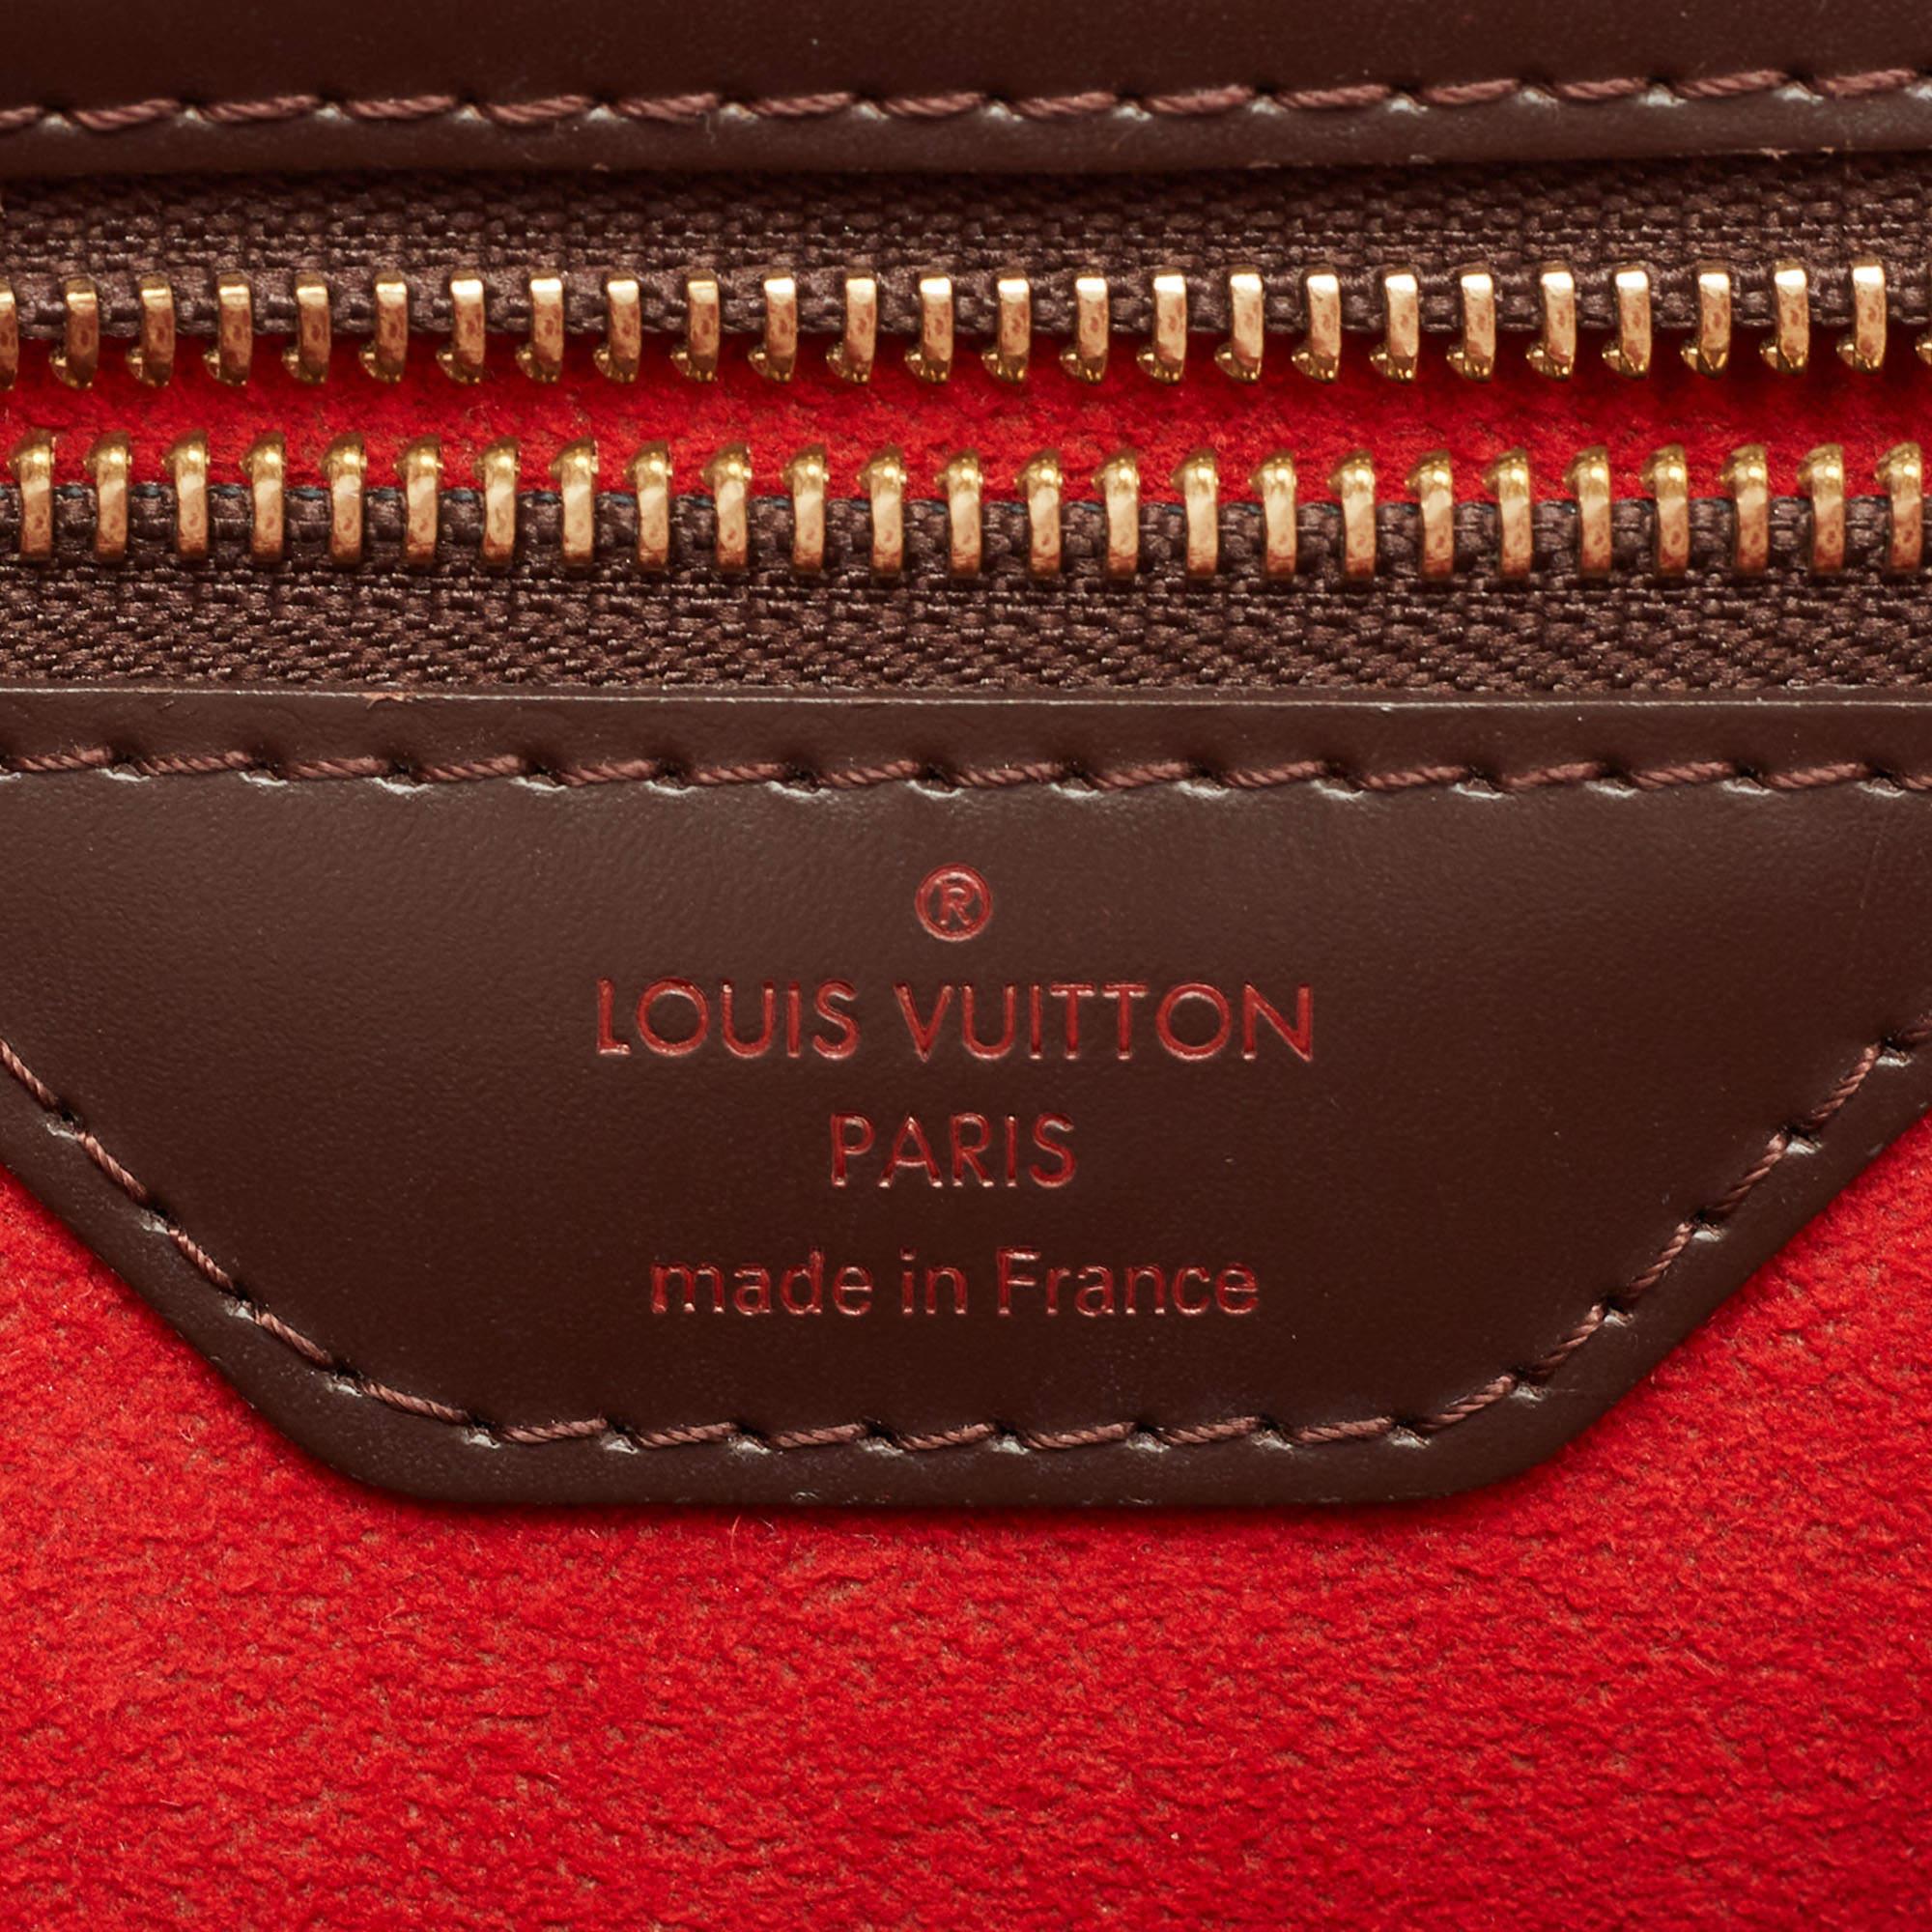 Louis Vuitton Damier Ebene Canvas Bergamo MM Bag 6